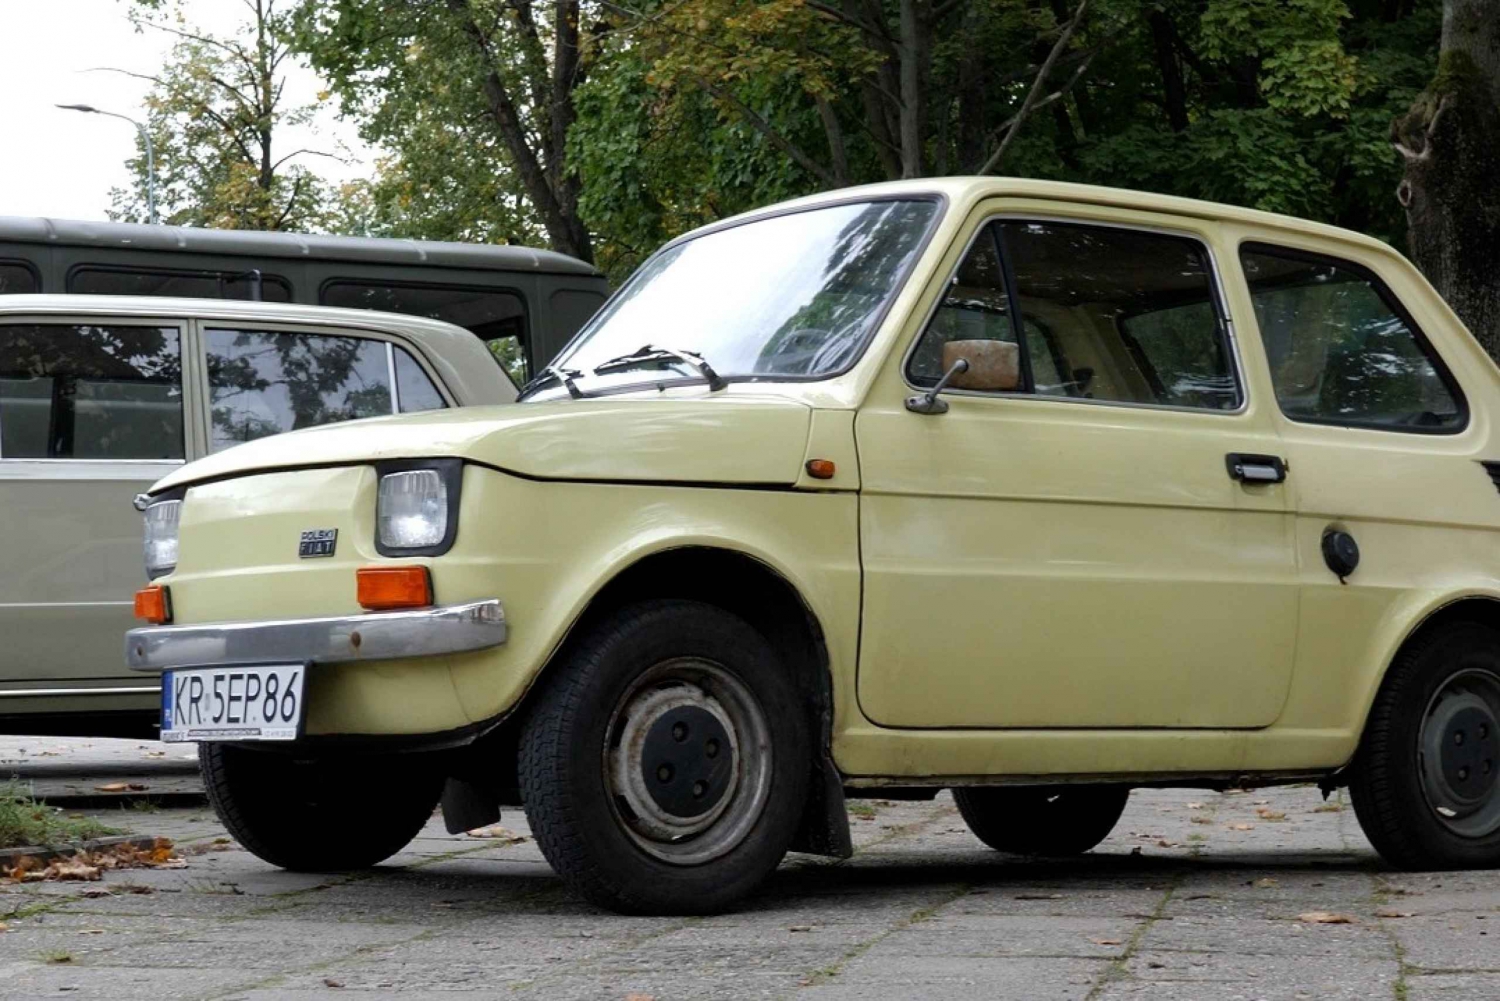 Cracovia: Visita guiada a Nowa Huta en un coche de la época comunista